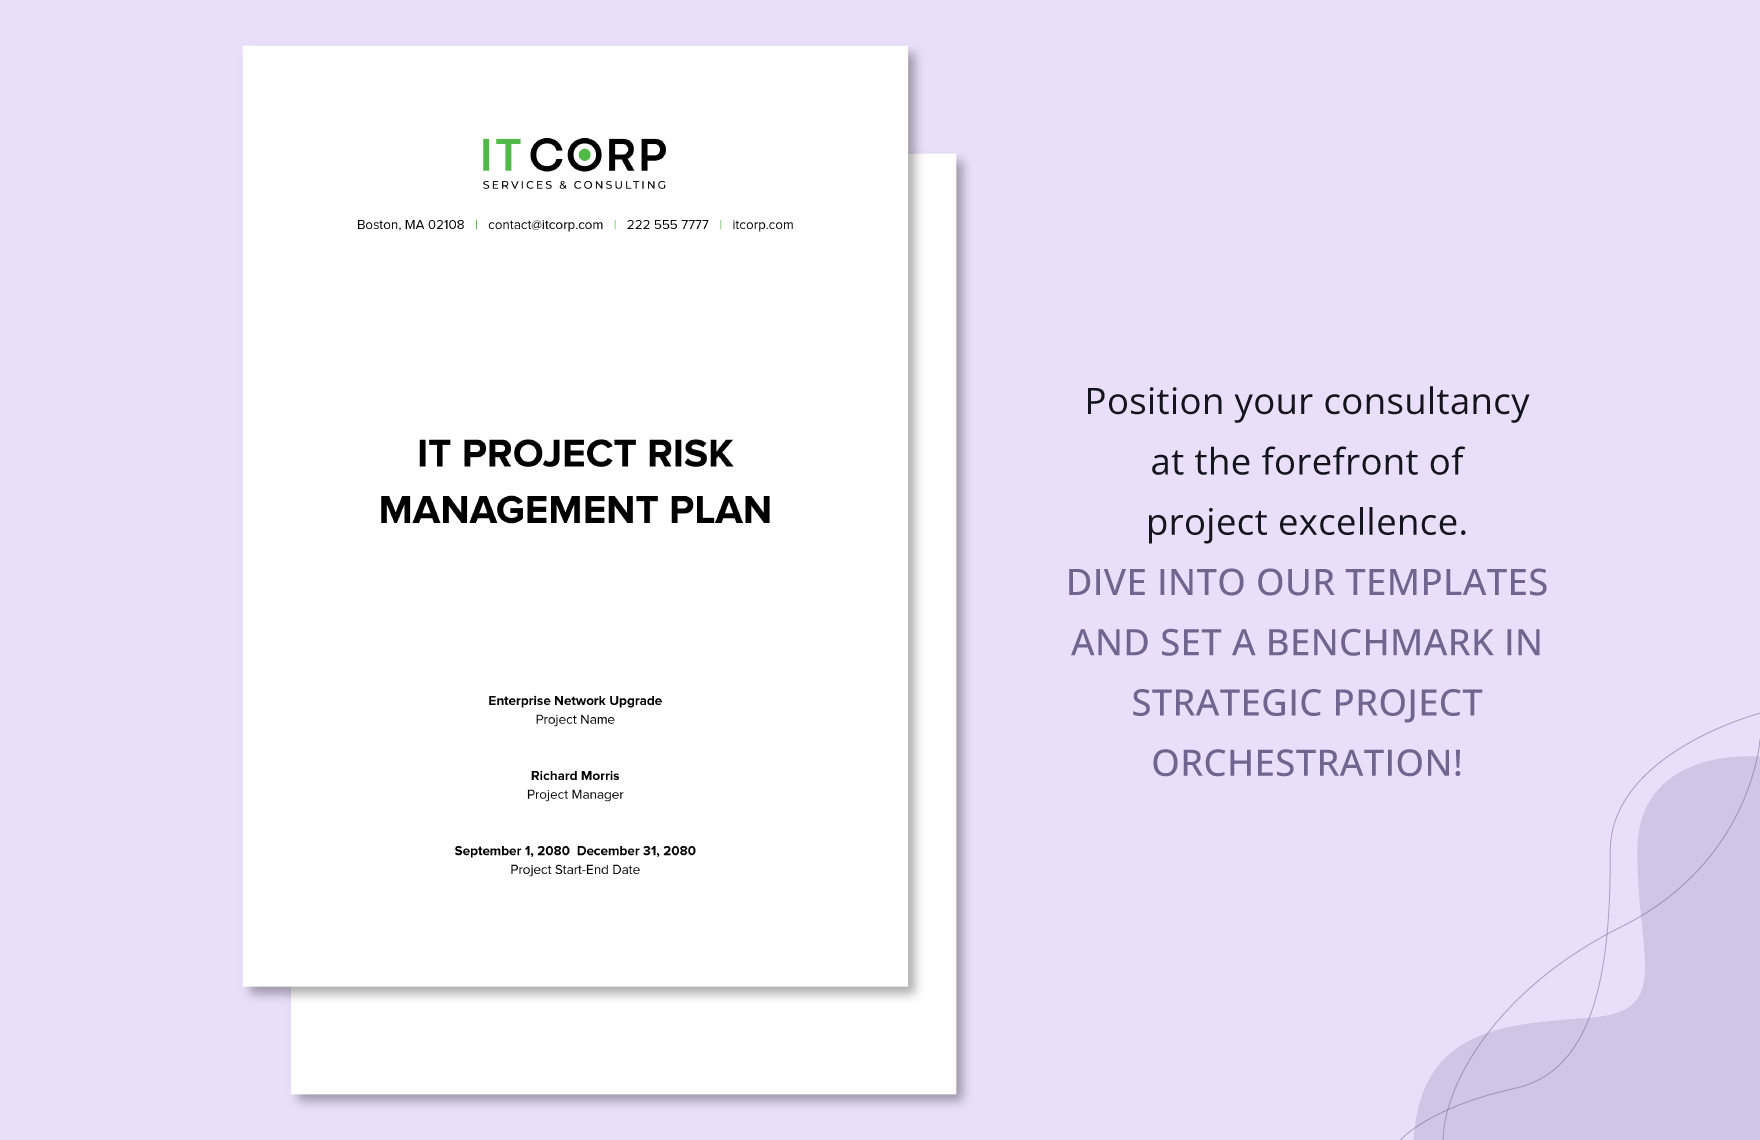 IT Project Risk Management Plan Template